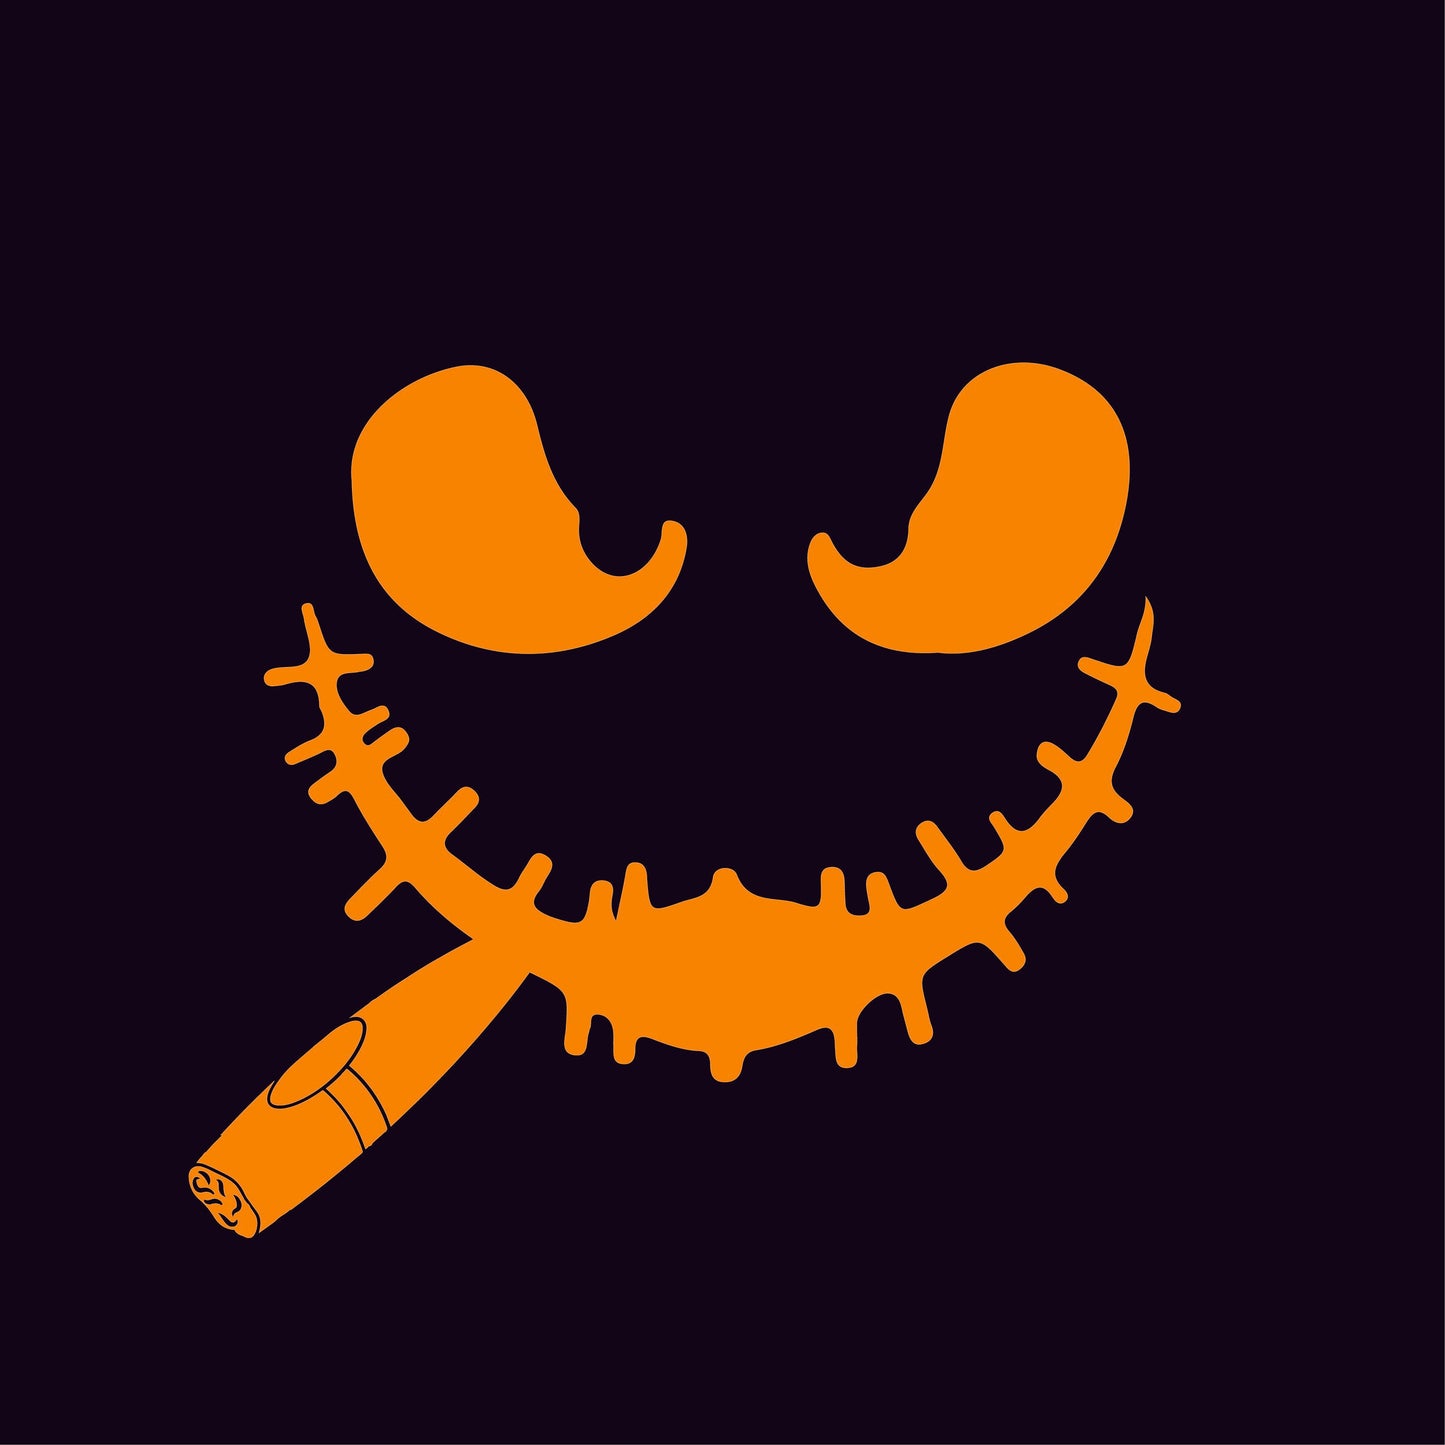 Pumpkin Having Cigar T Shirt - Funny Graphic T Shirts